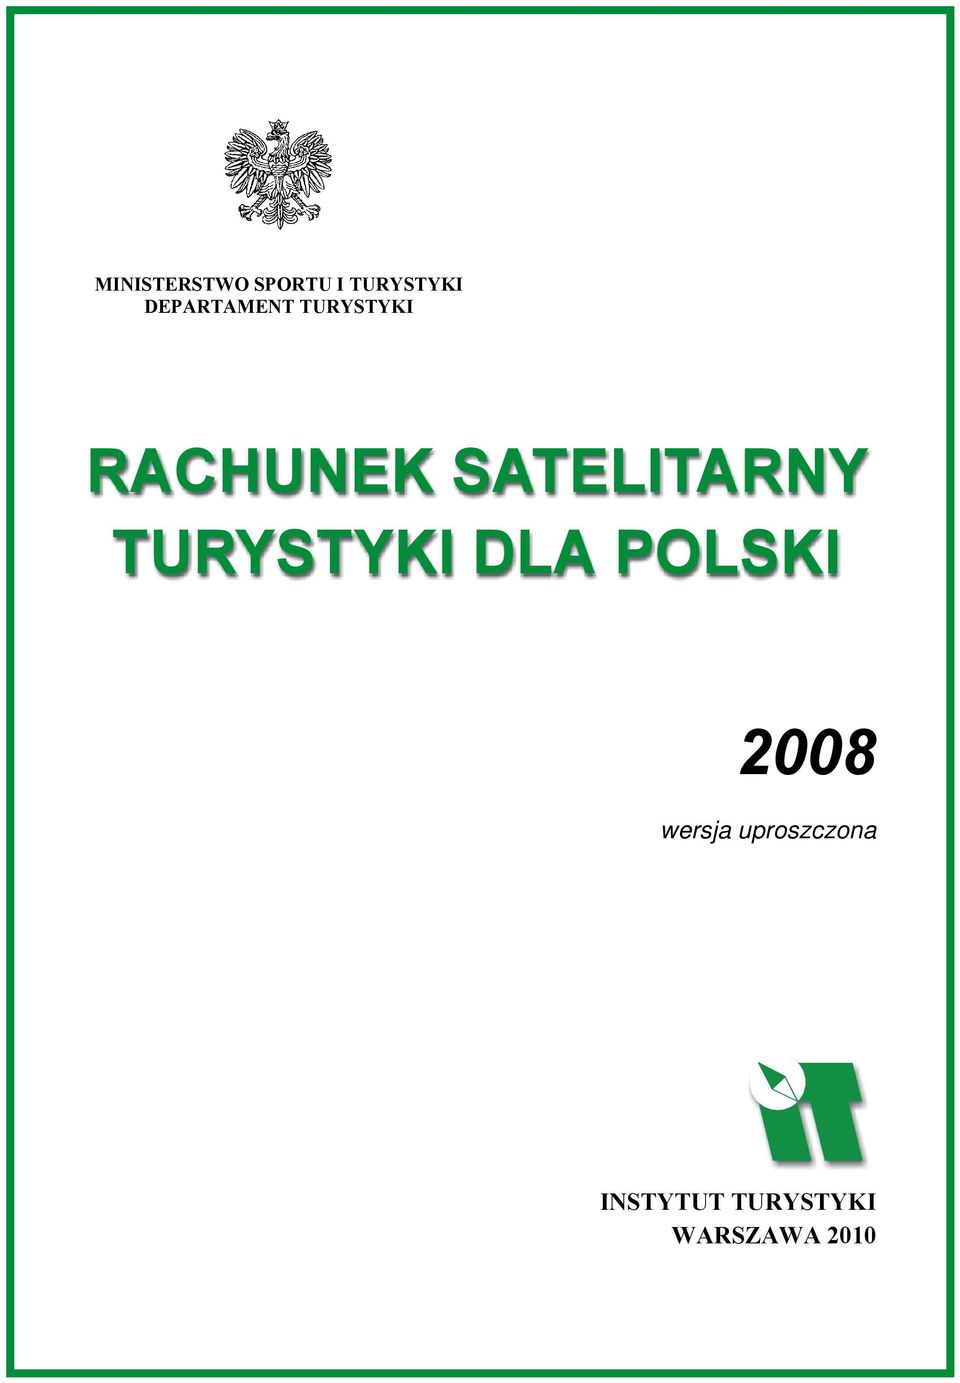 SATELITARNY TURYSTYKI DLA POLSKI 2008